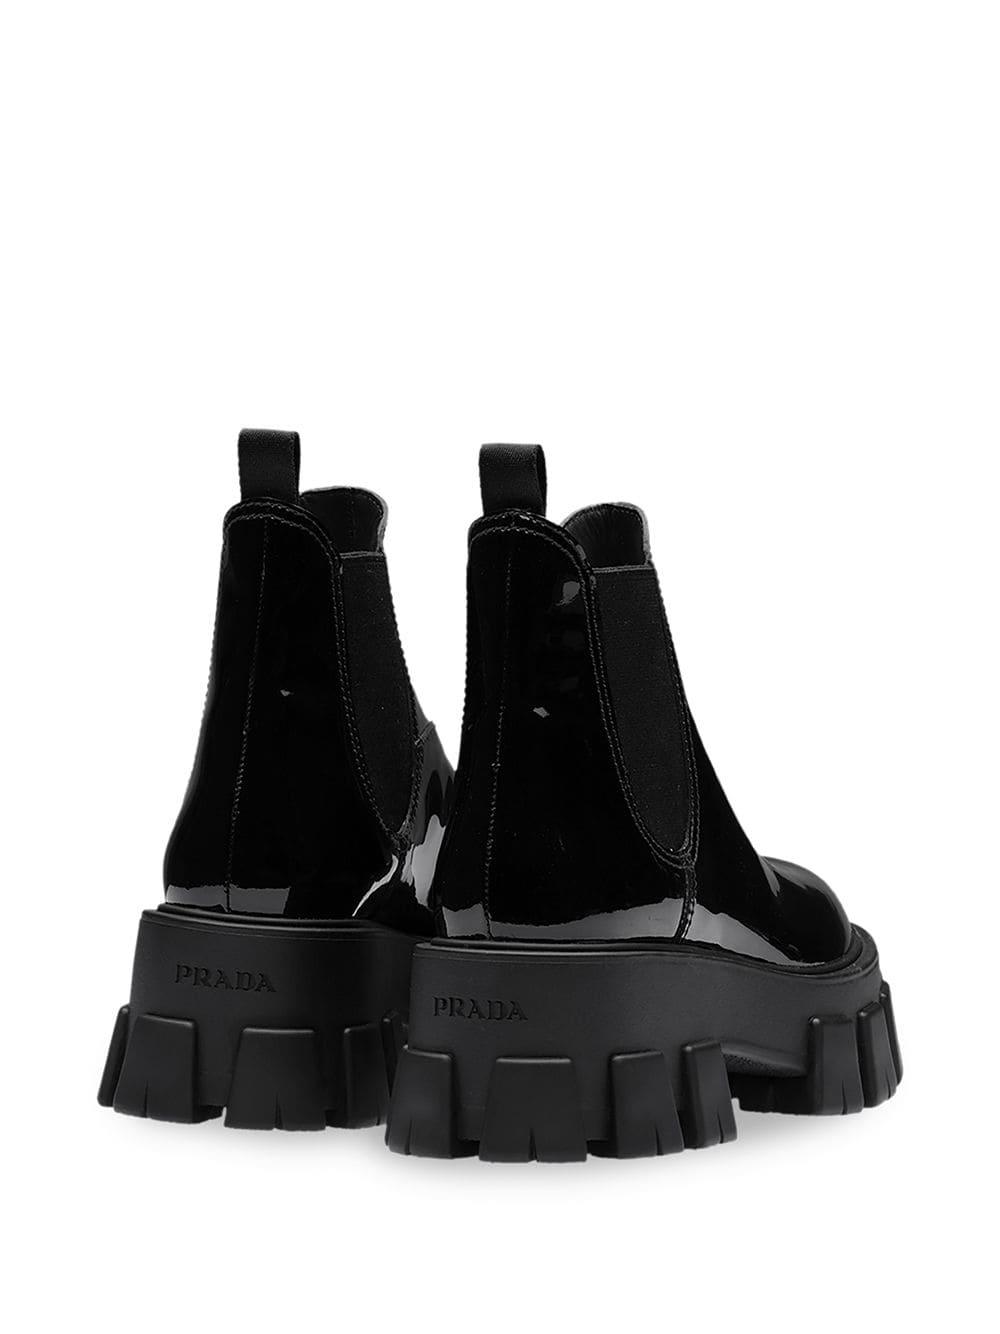 Prada Moonlight Patent Leather Booties in Black | Lyst Canada